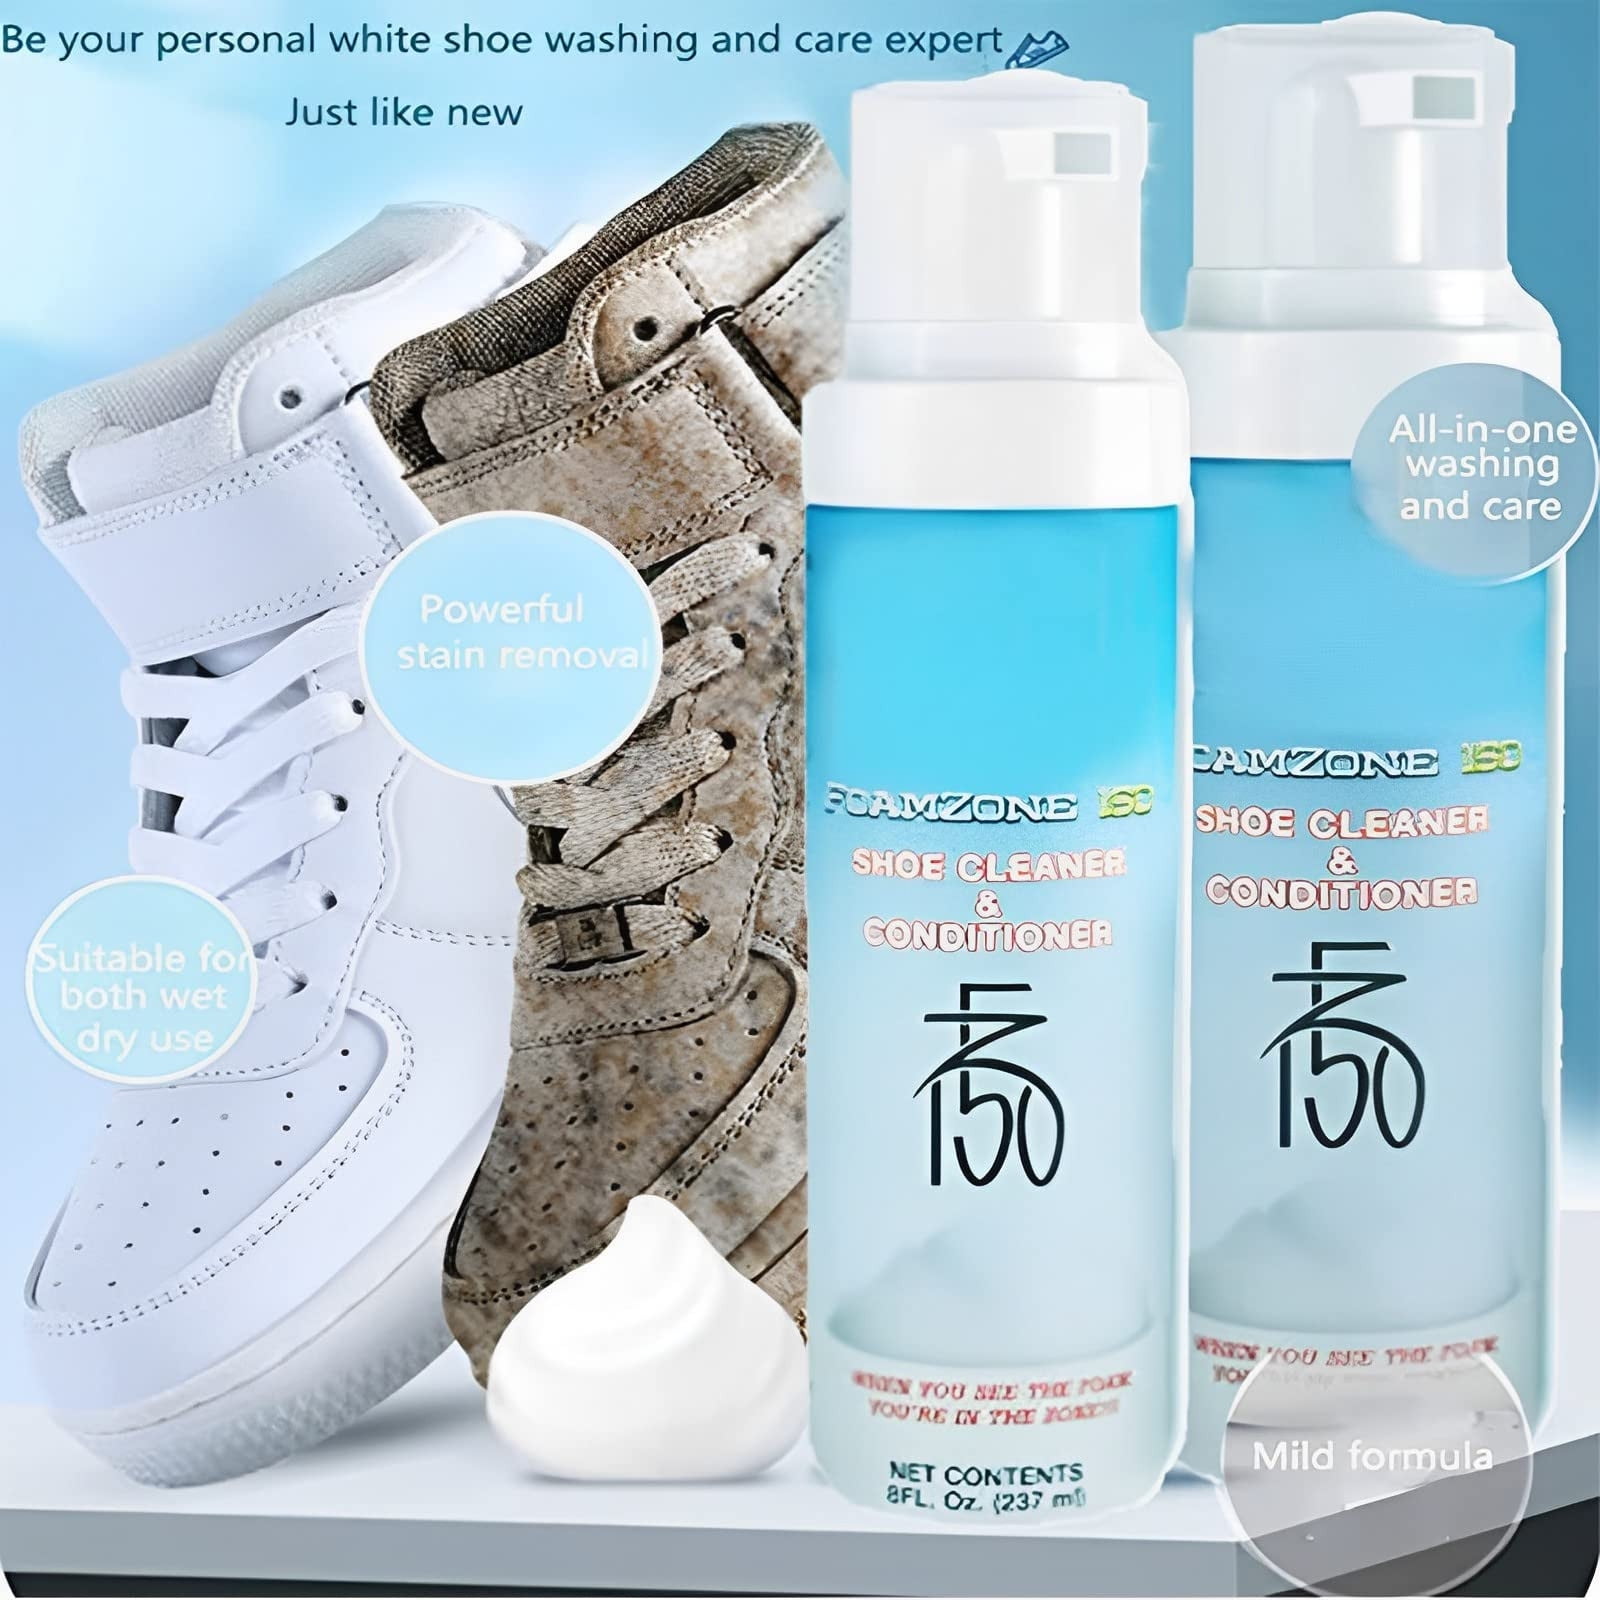 Foam Zone 150 Shoe Cleaner  100ml Nettoyant Chaussure Blanche